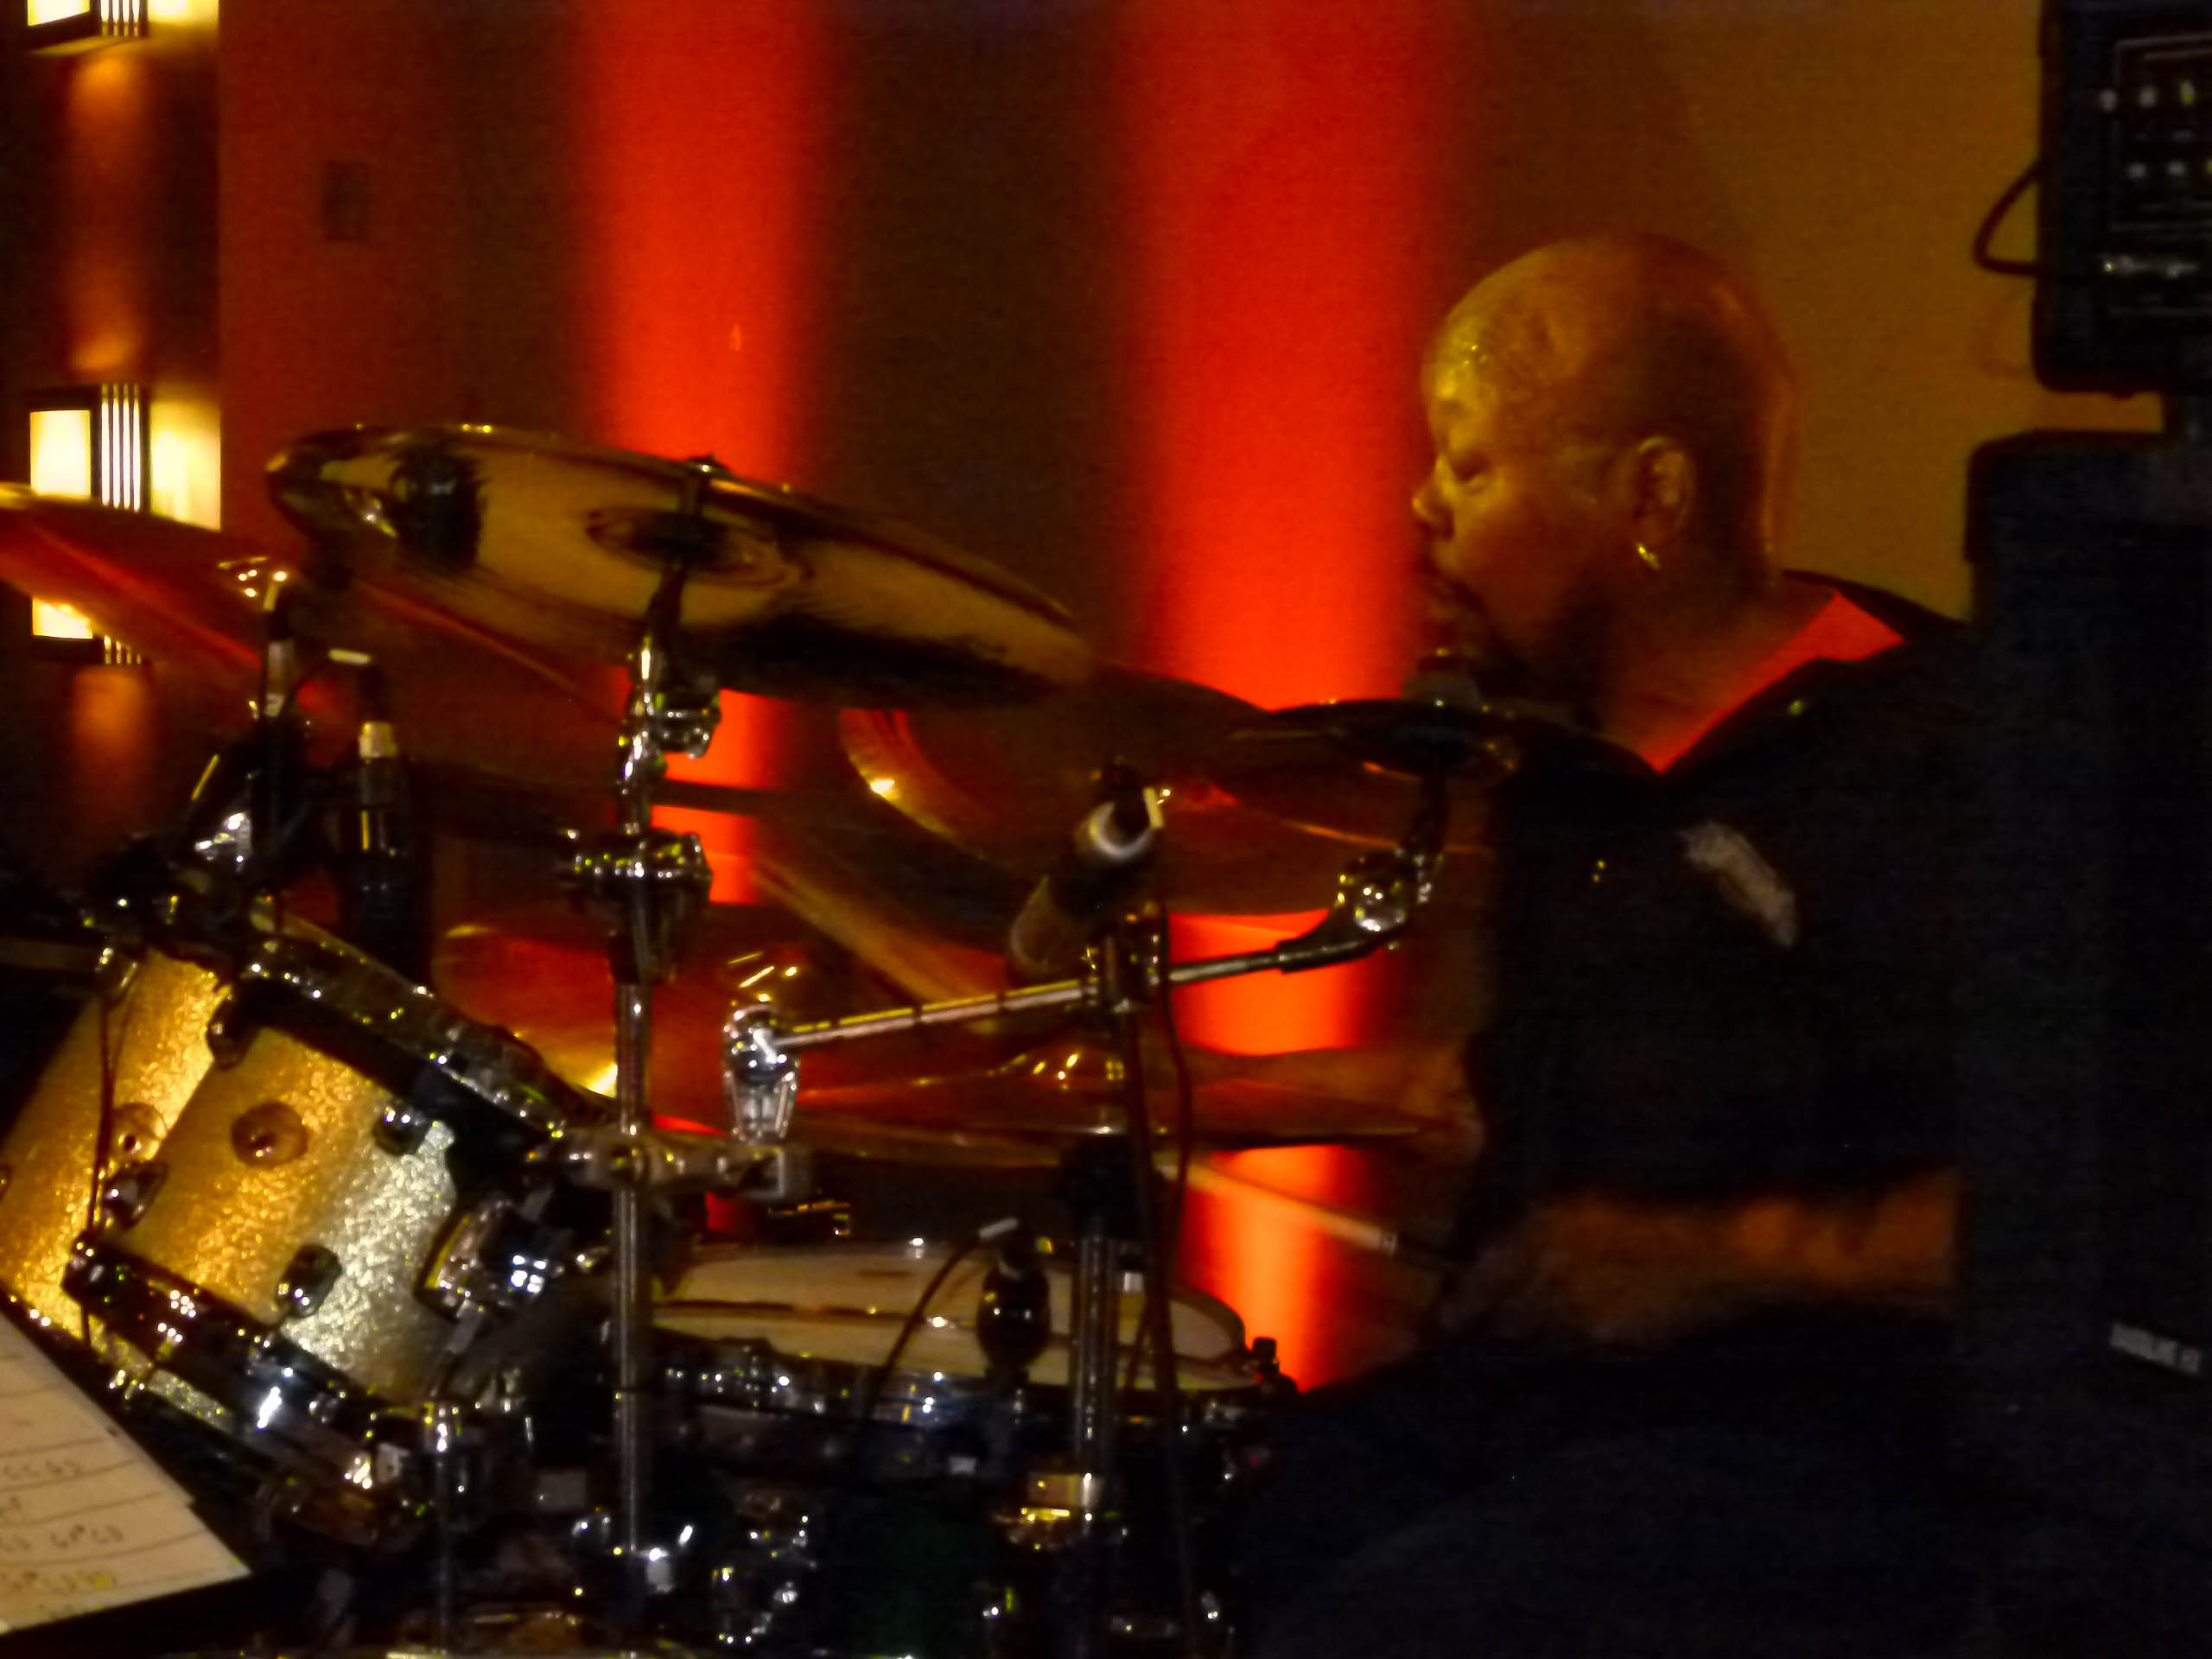 The Houserockers' drummer Jeffrey "Joffo" Simmons with his sticks a blazin'.